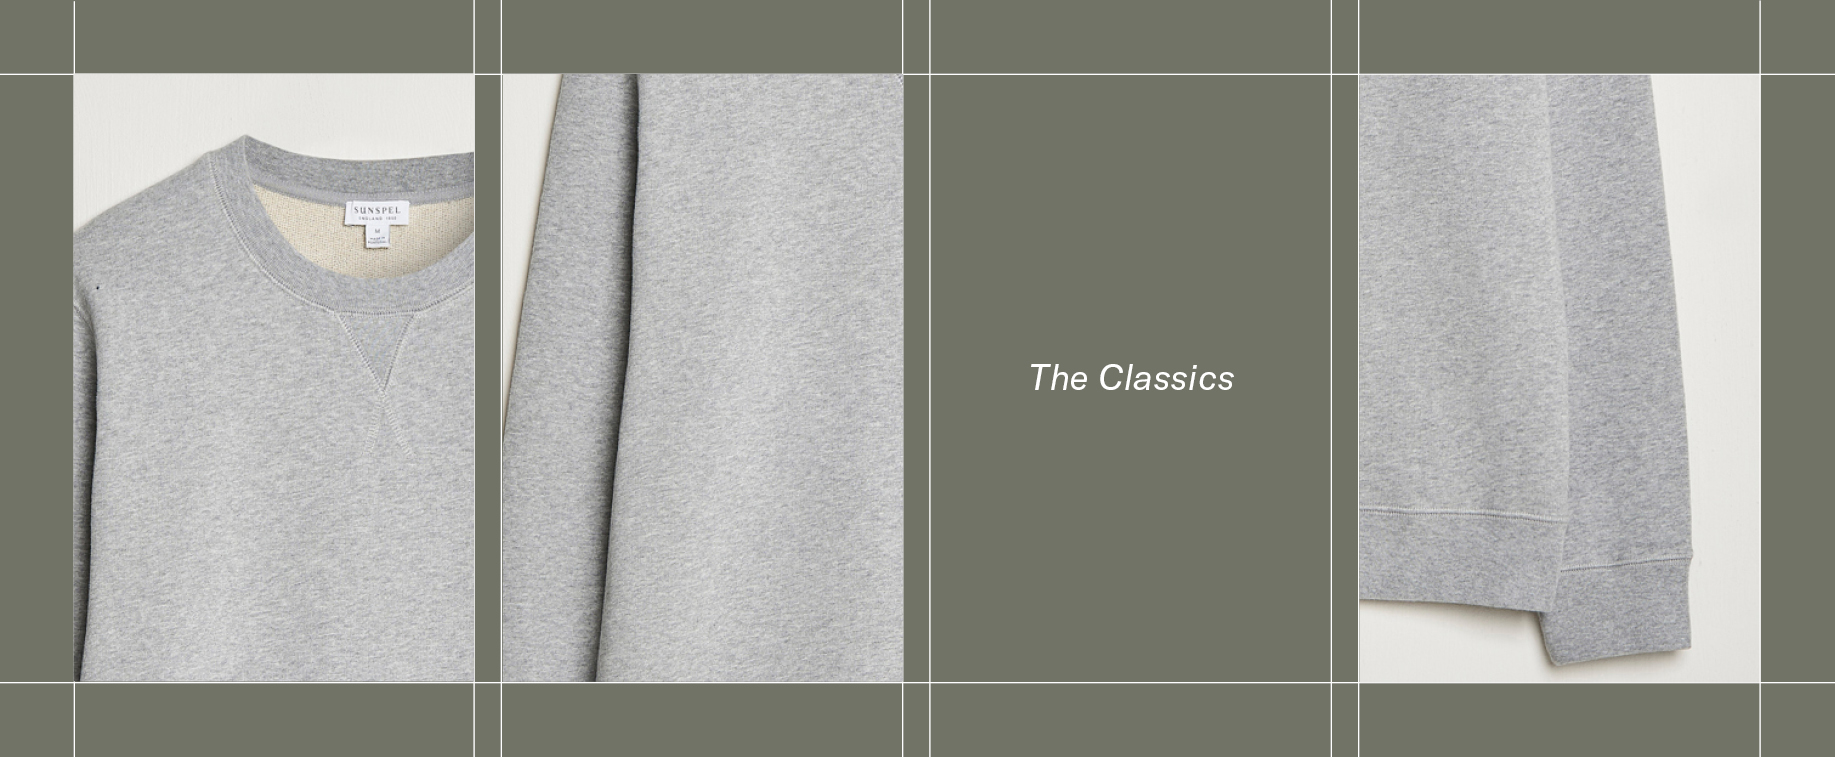 The Classic: The grey sweatshirt